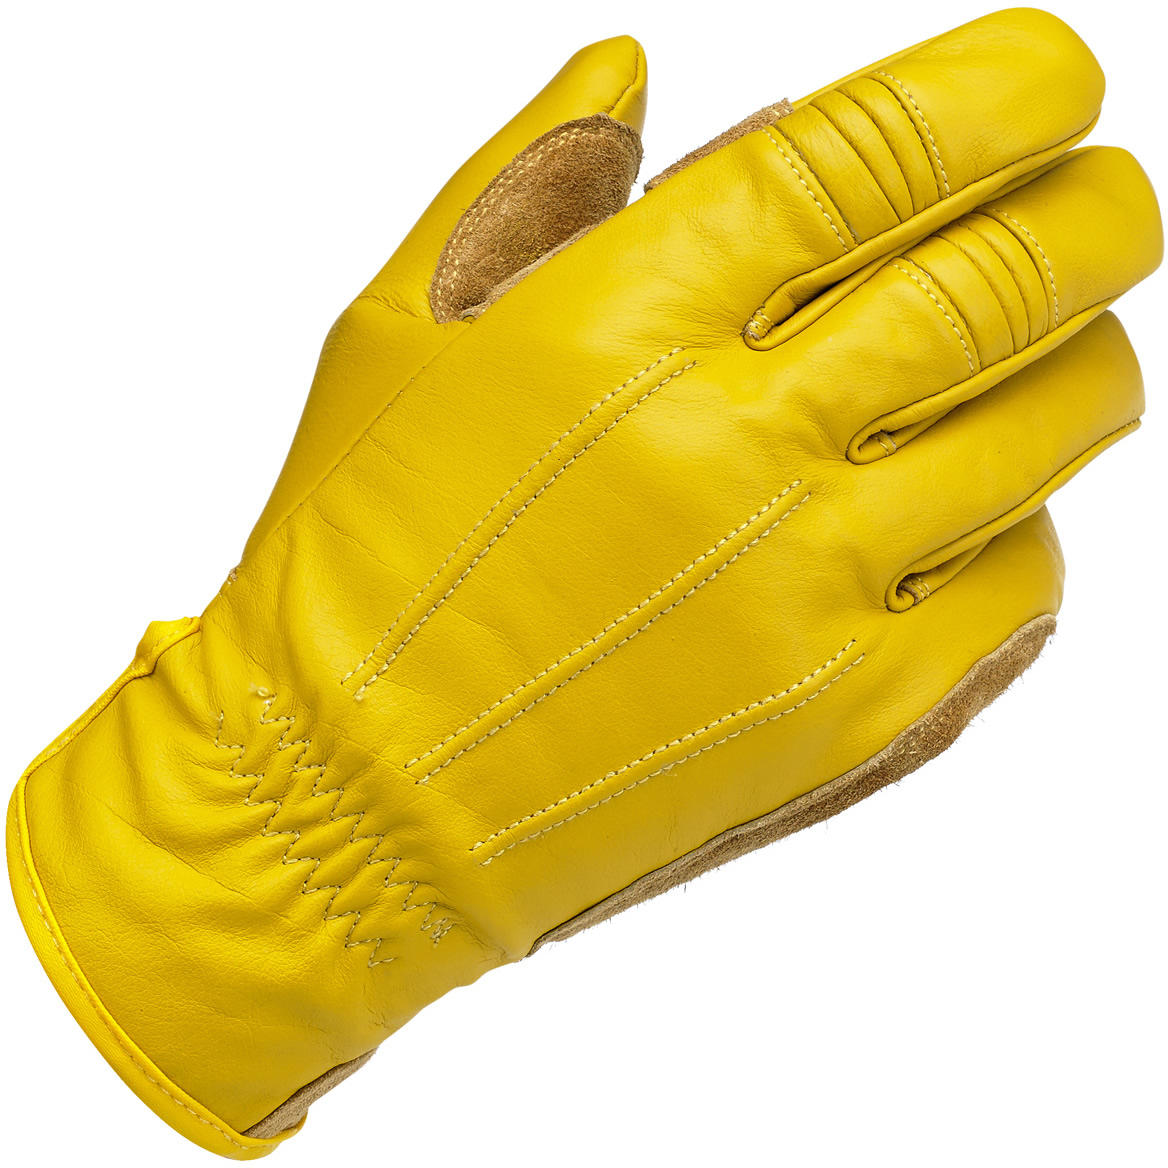 Biltwell Work Gloves (Gold, Medium)